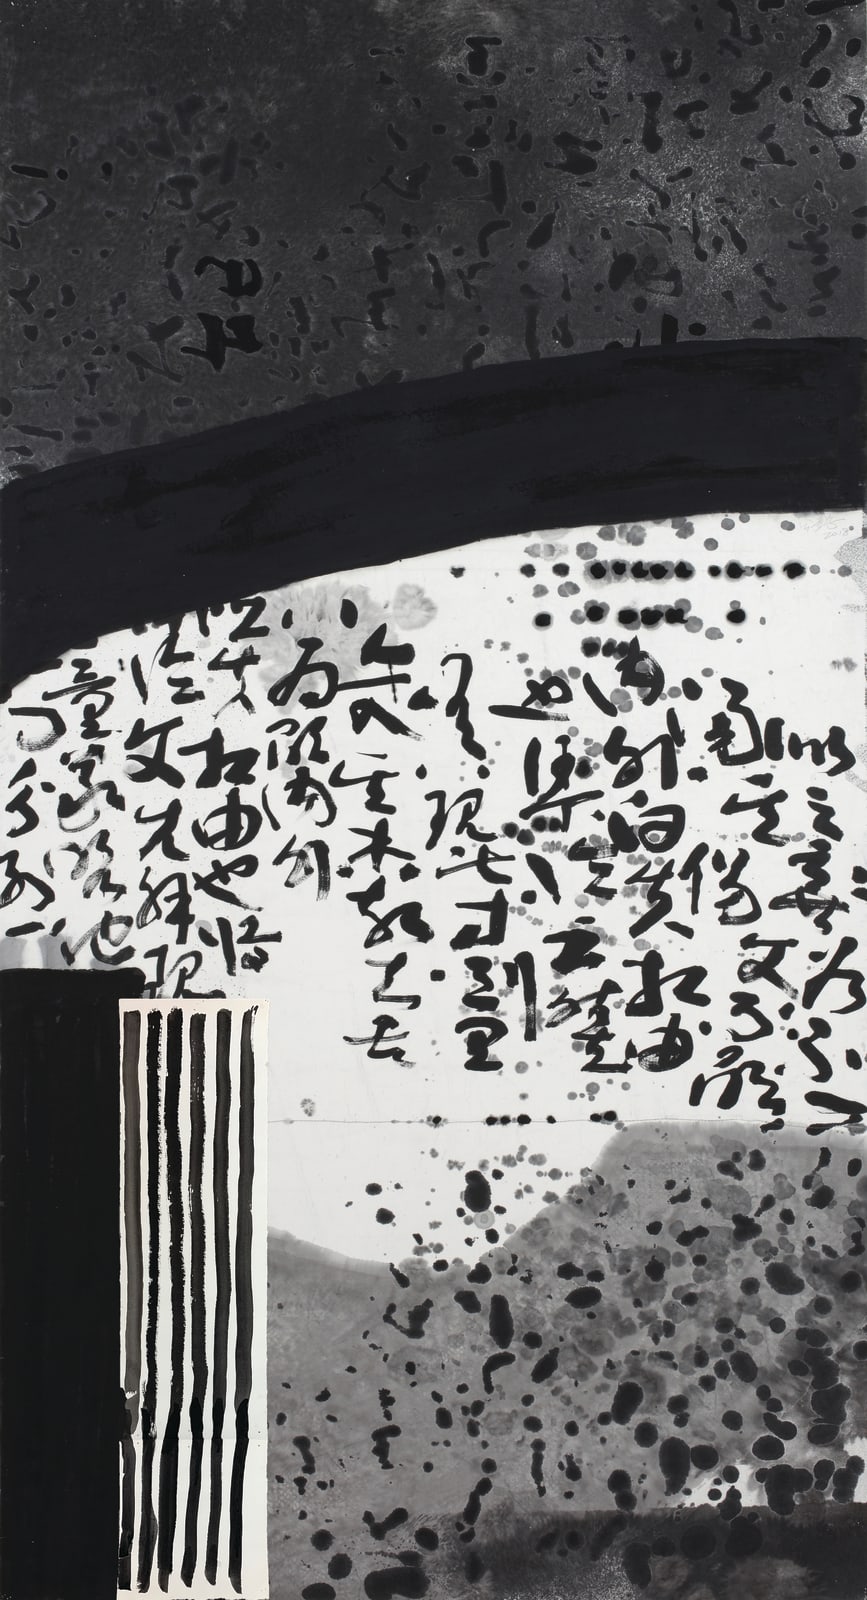 Wang Gongyi 王公懿, Order, Disorder 有序·無序, 2018